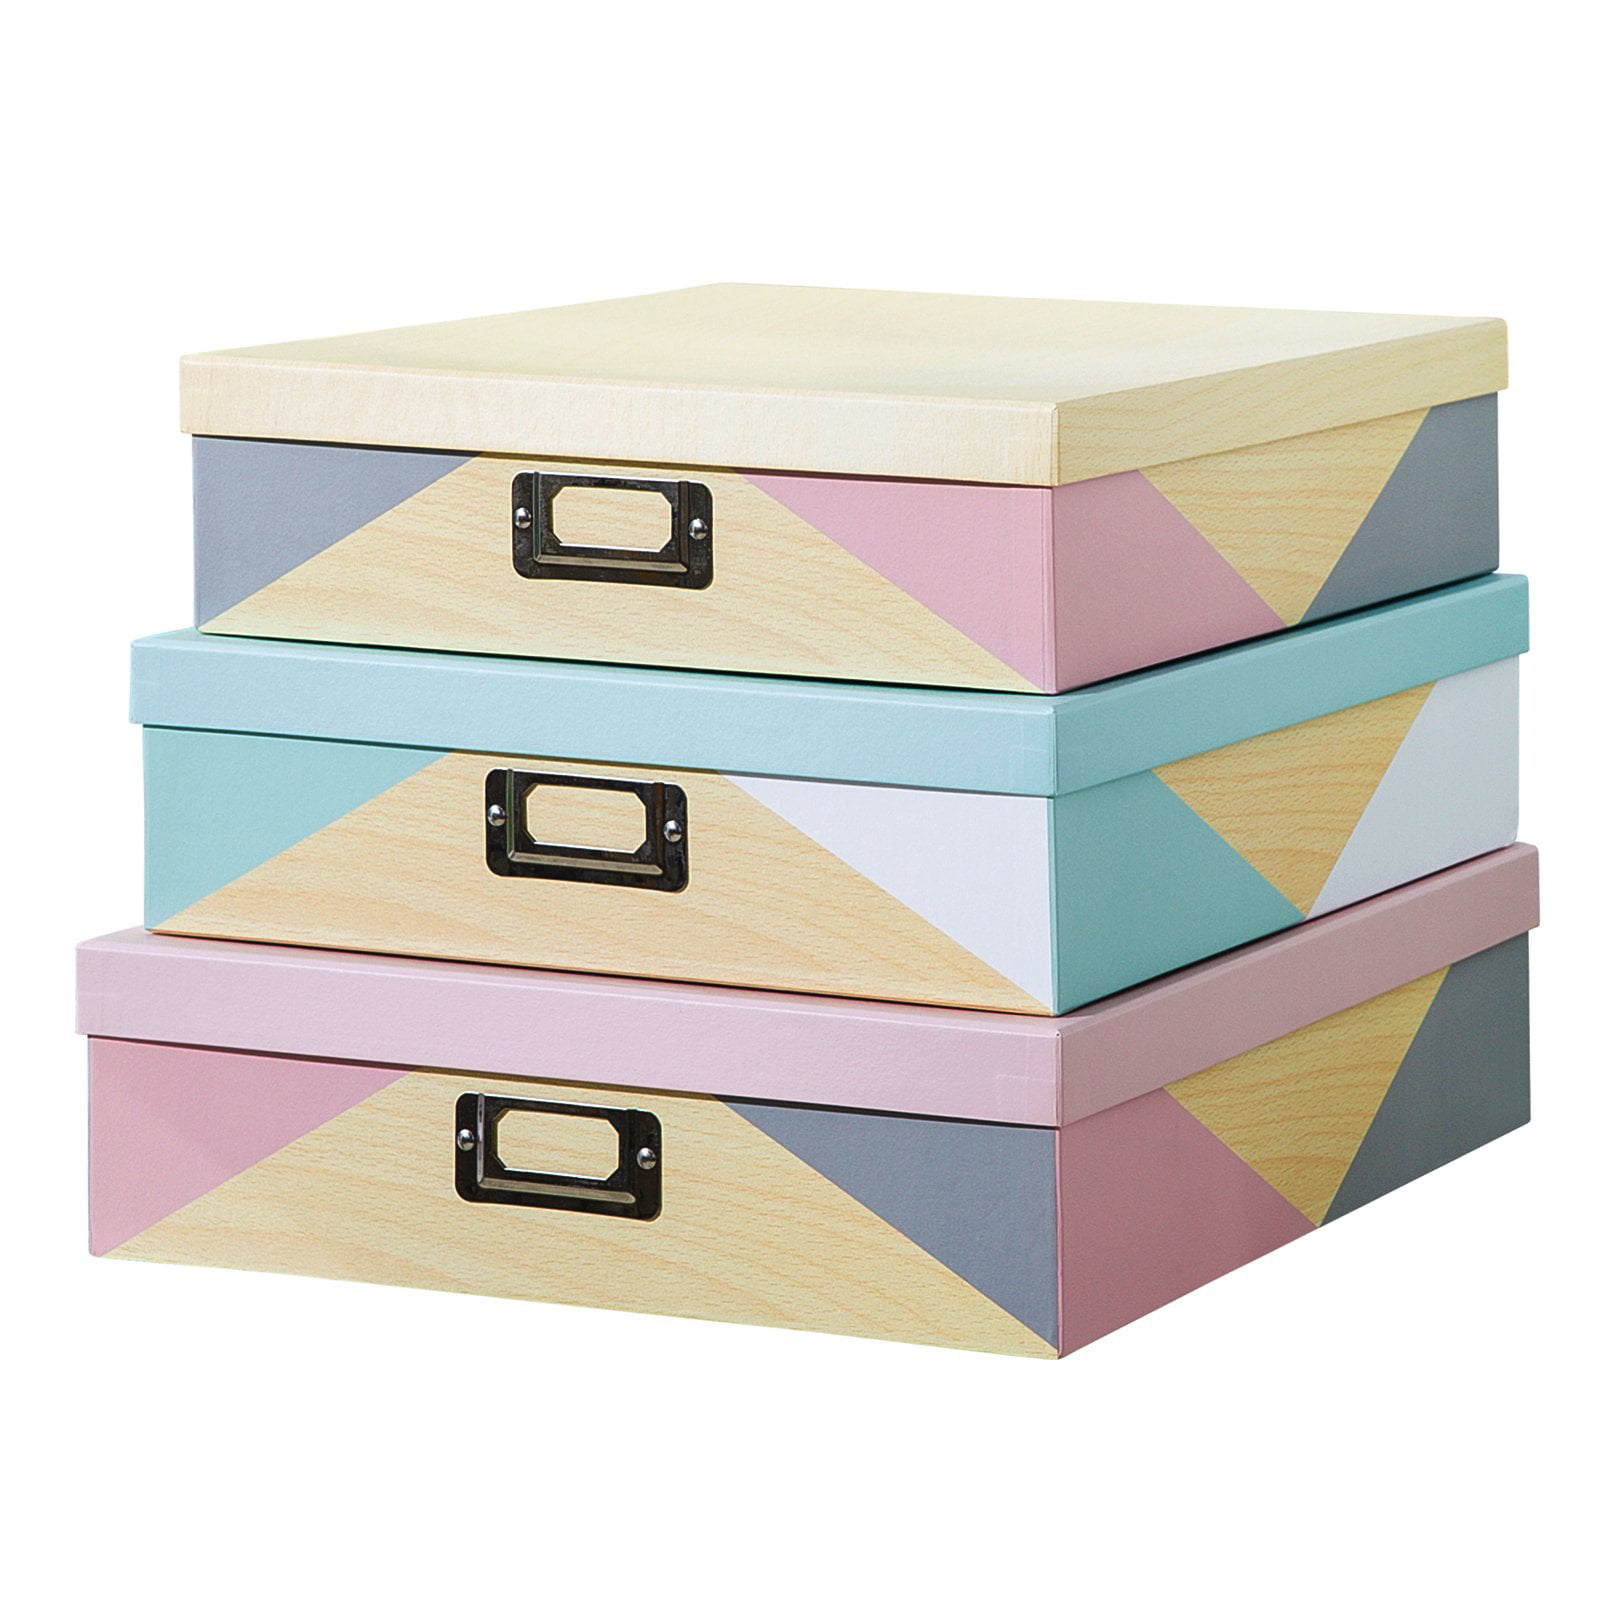 Slpr Decorative Storage Cardboard Boxes, Decorative Storage Boxes With Lids Cardboard